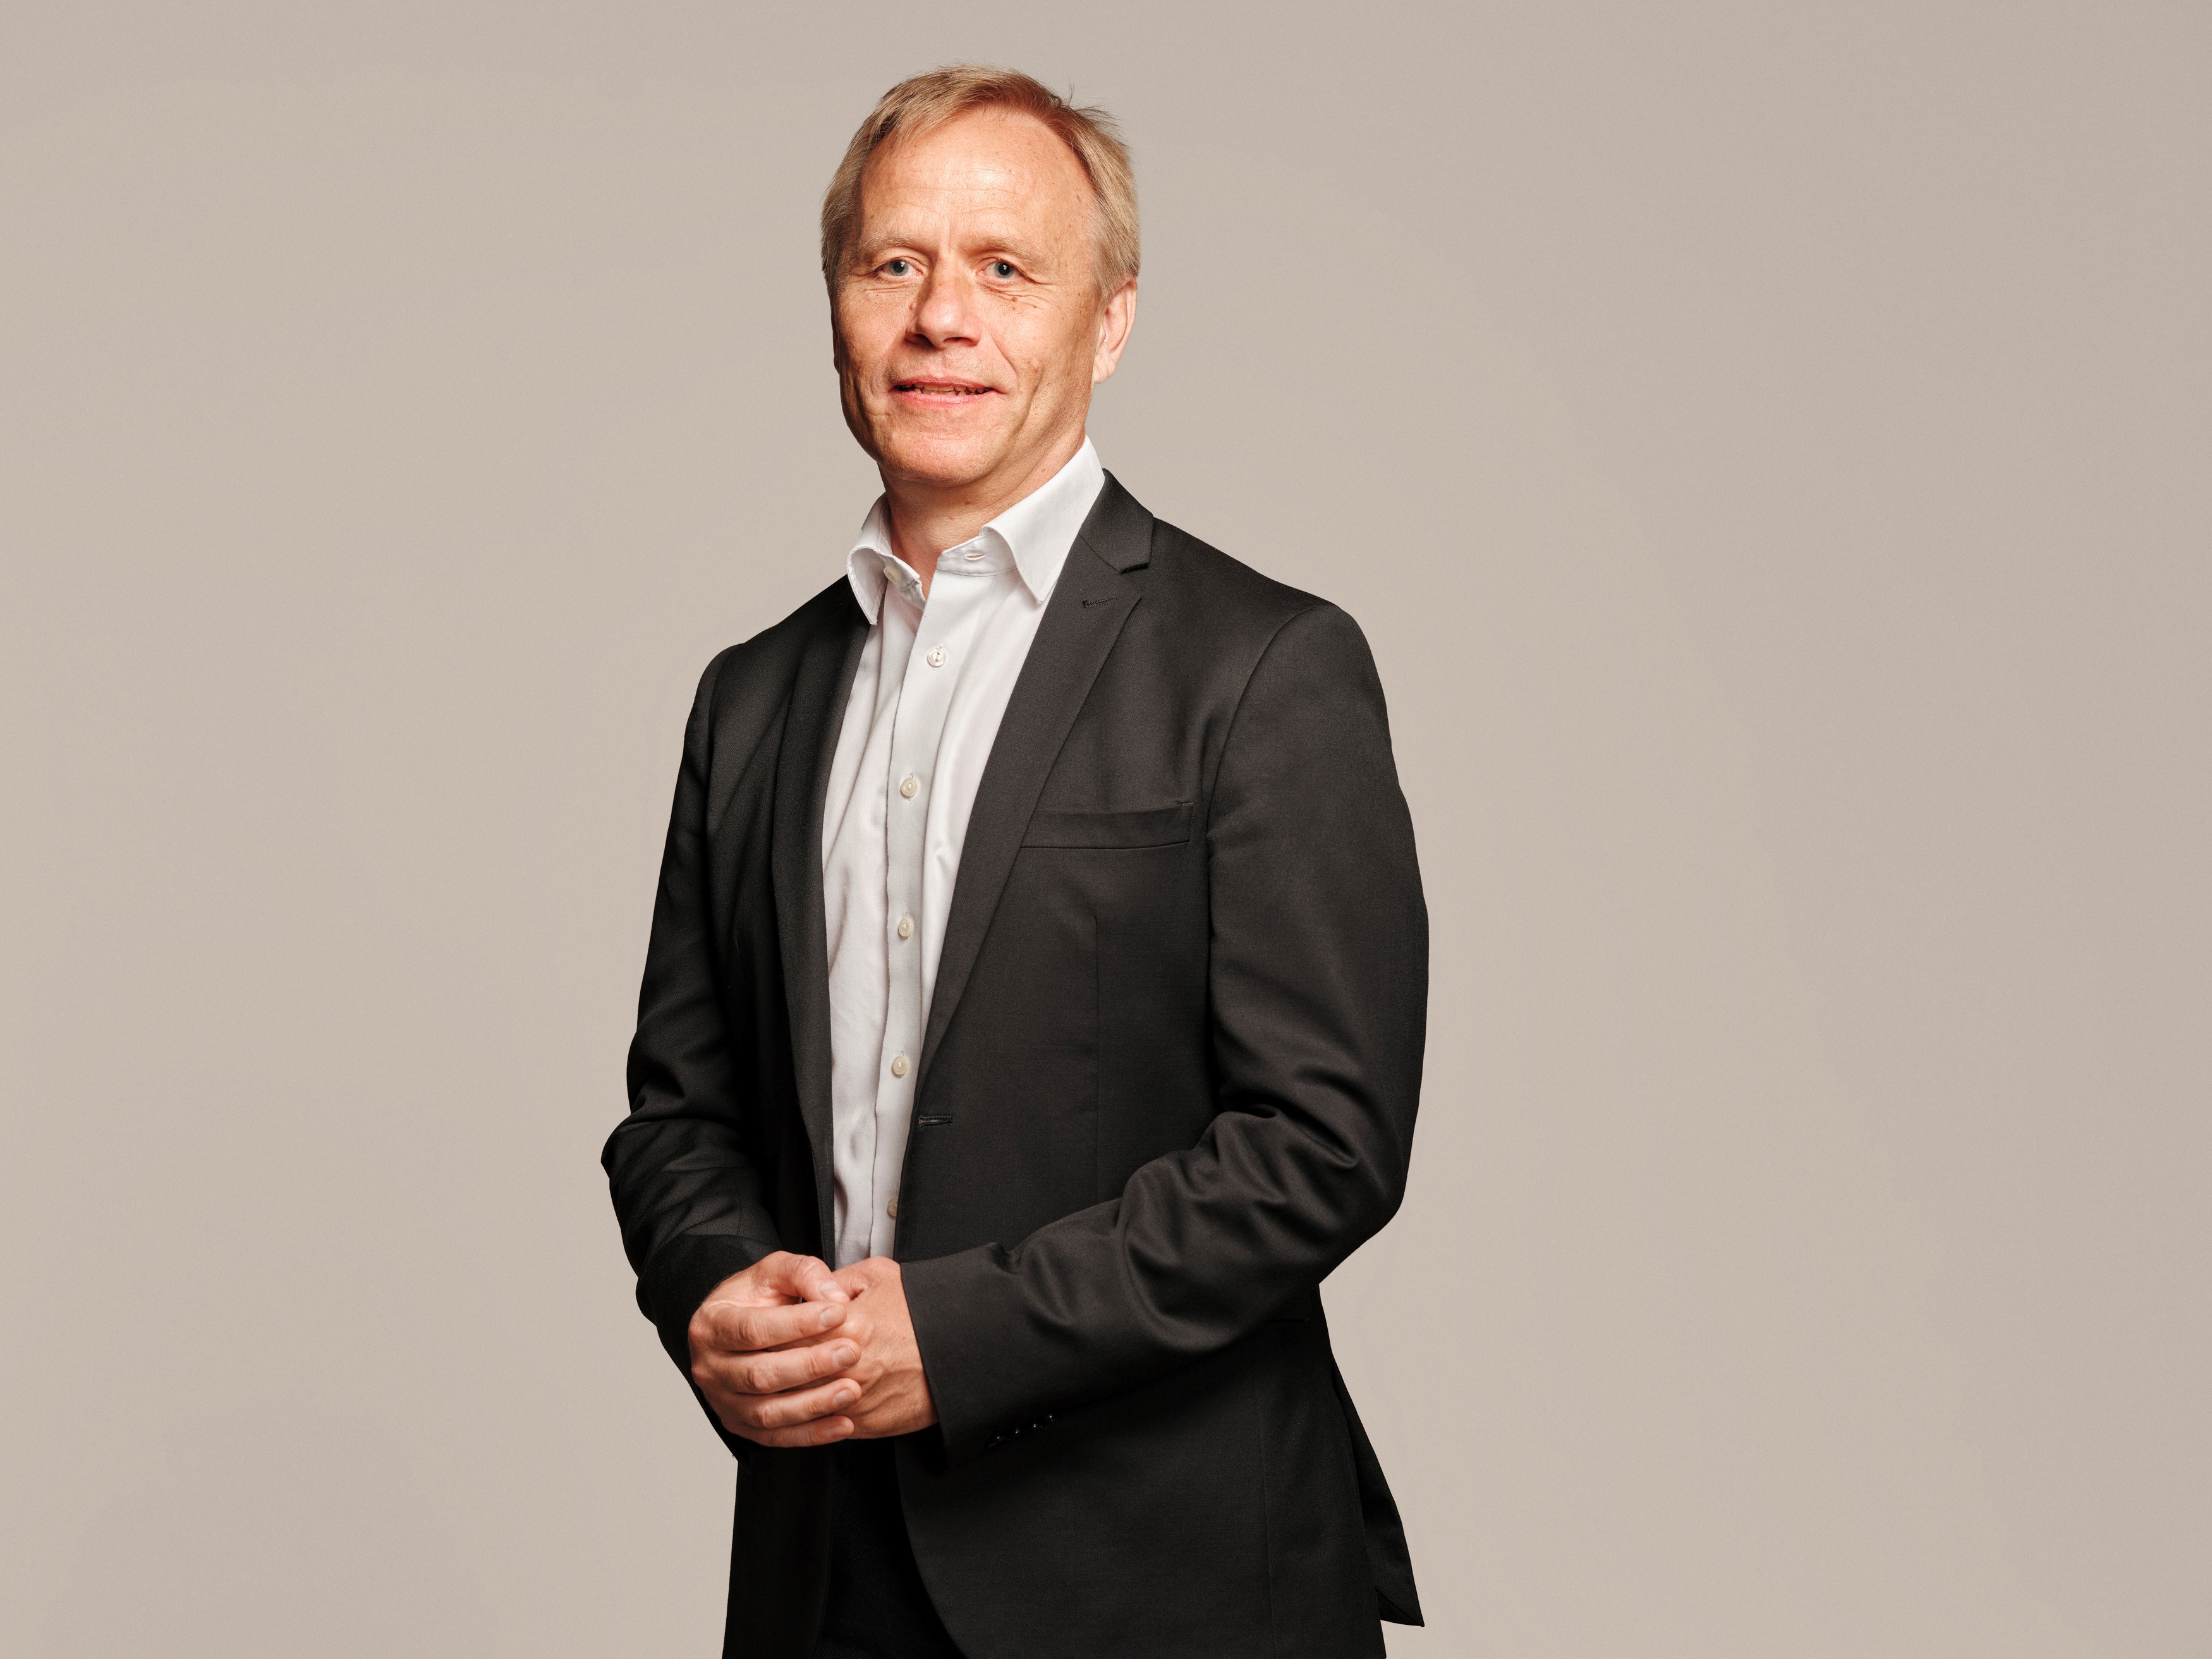 Jens Christian Lindhard Nielsen - Kommunikationsdirektør og rådgivningsekspert, Velliv